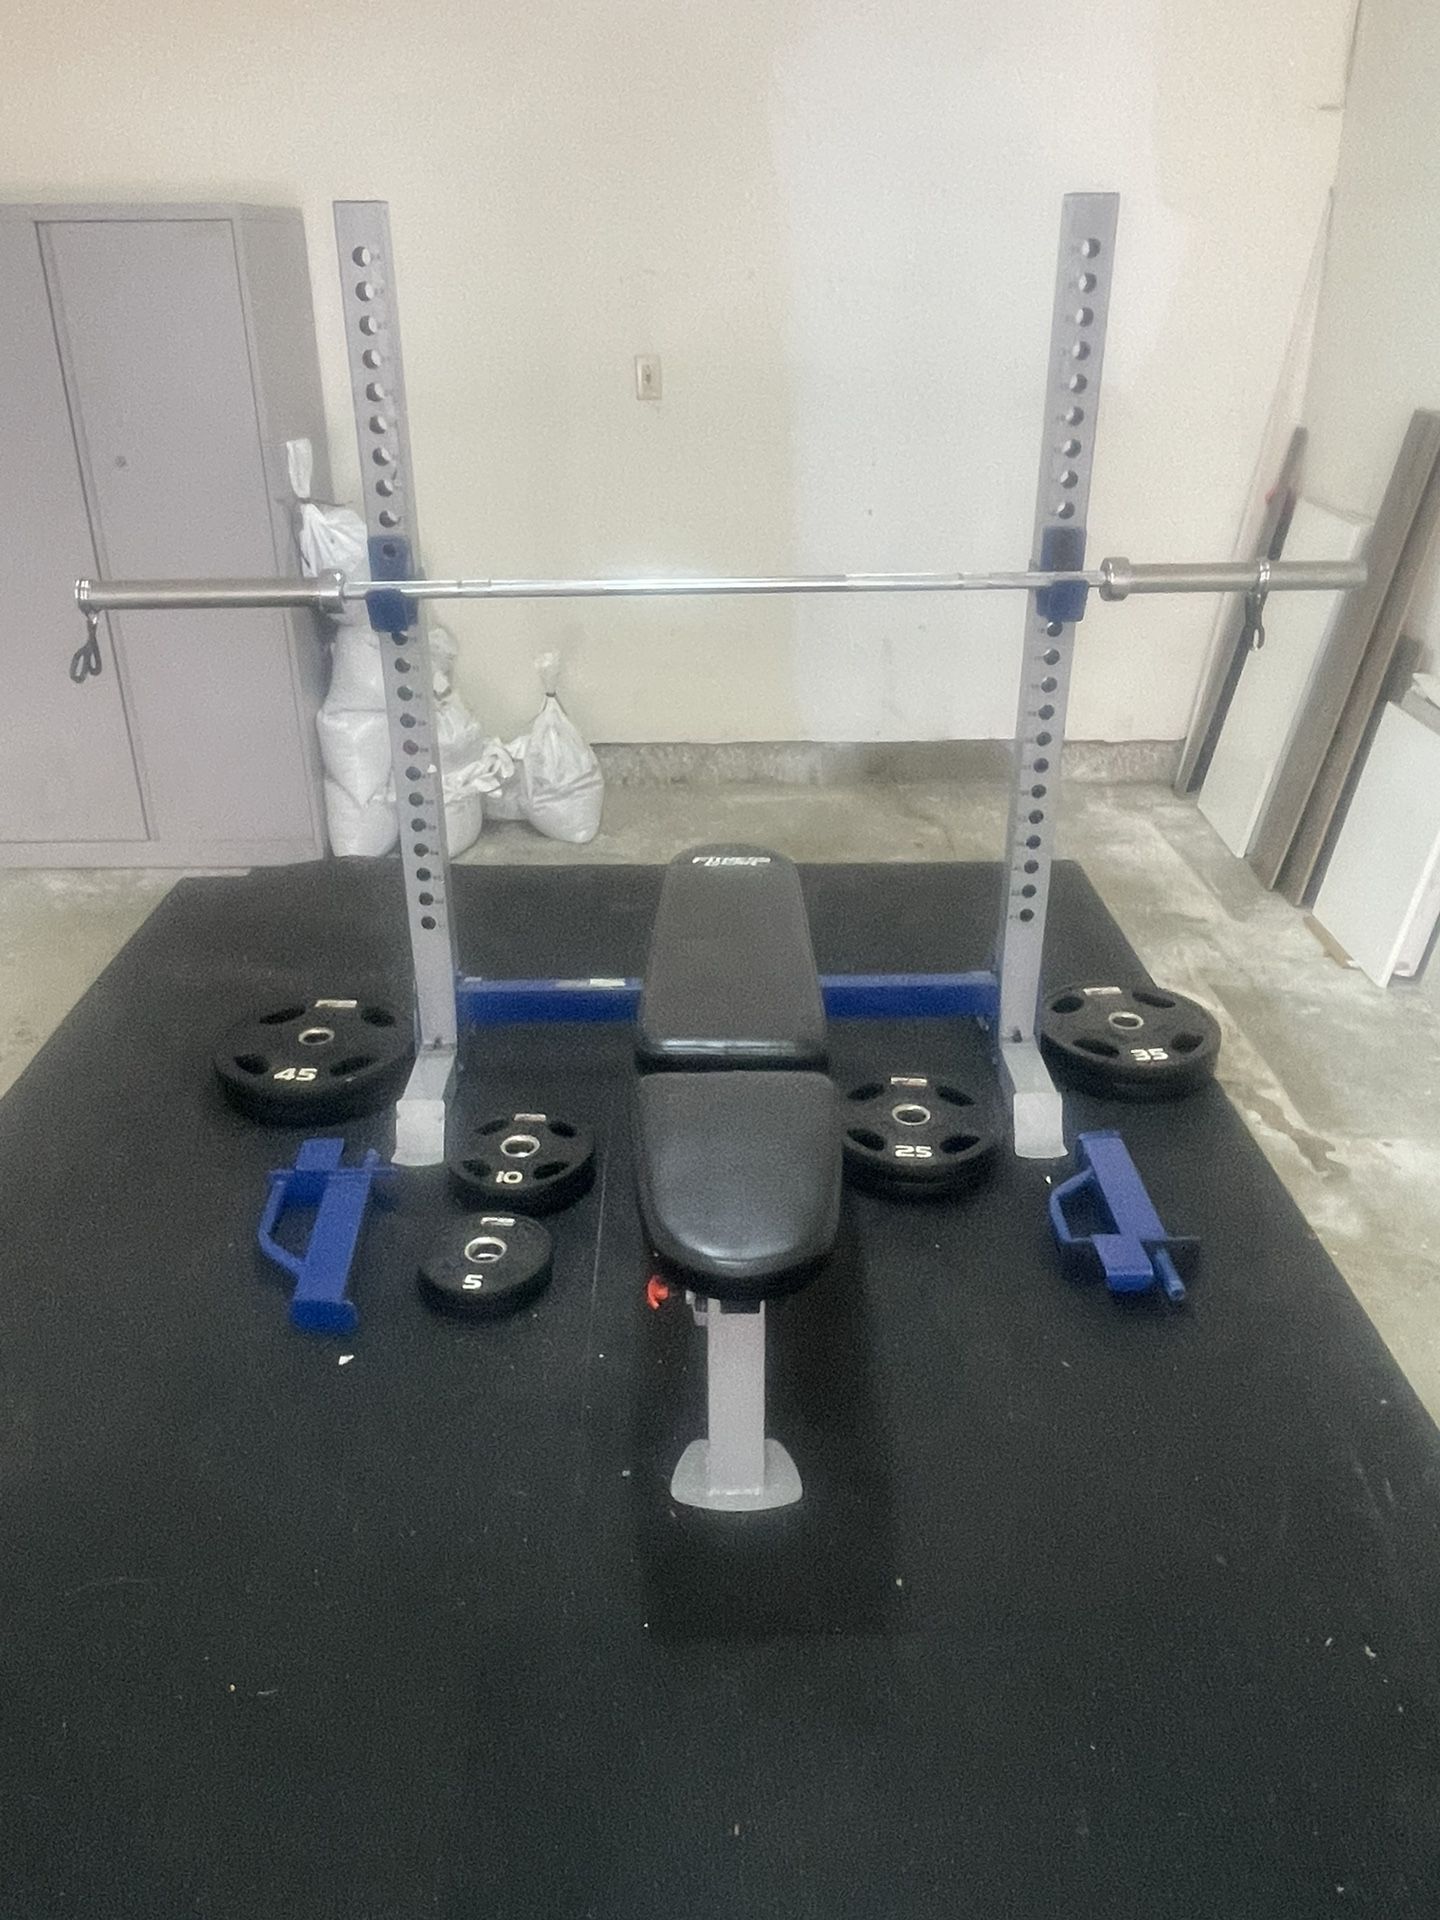 Gym Set